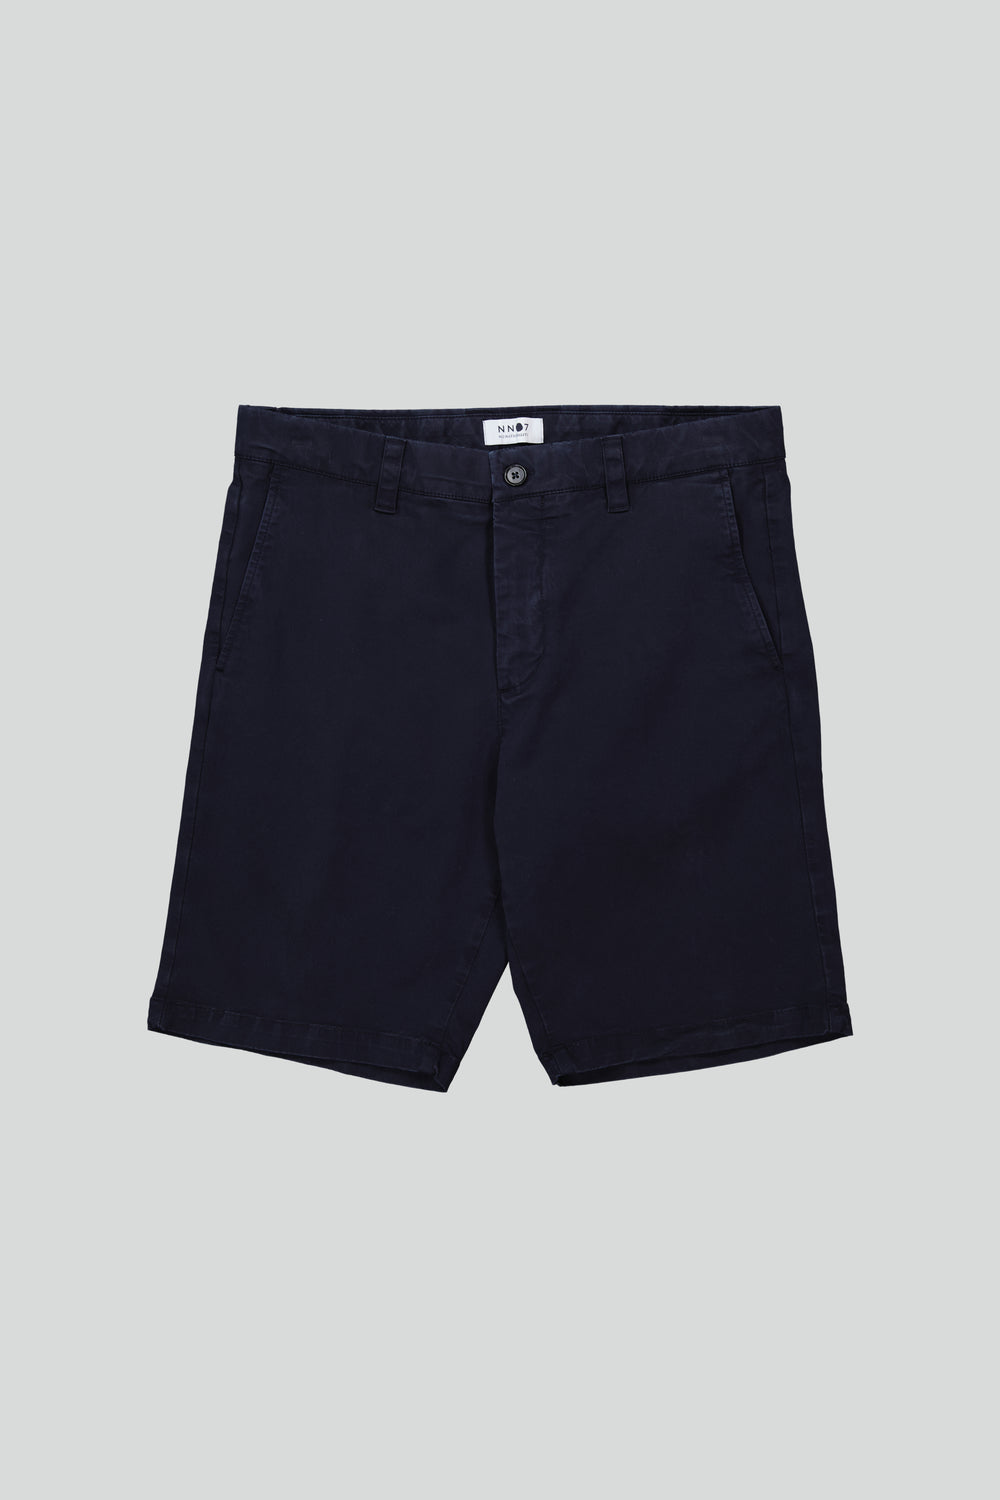 Crown Shorts 1090 - Navy Blue 200